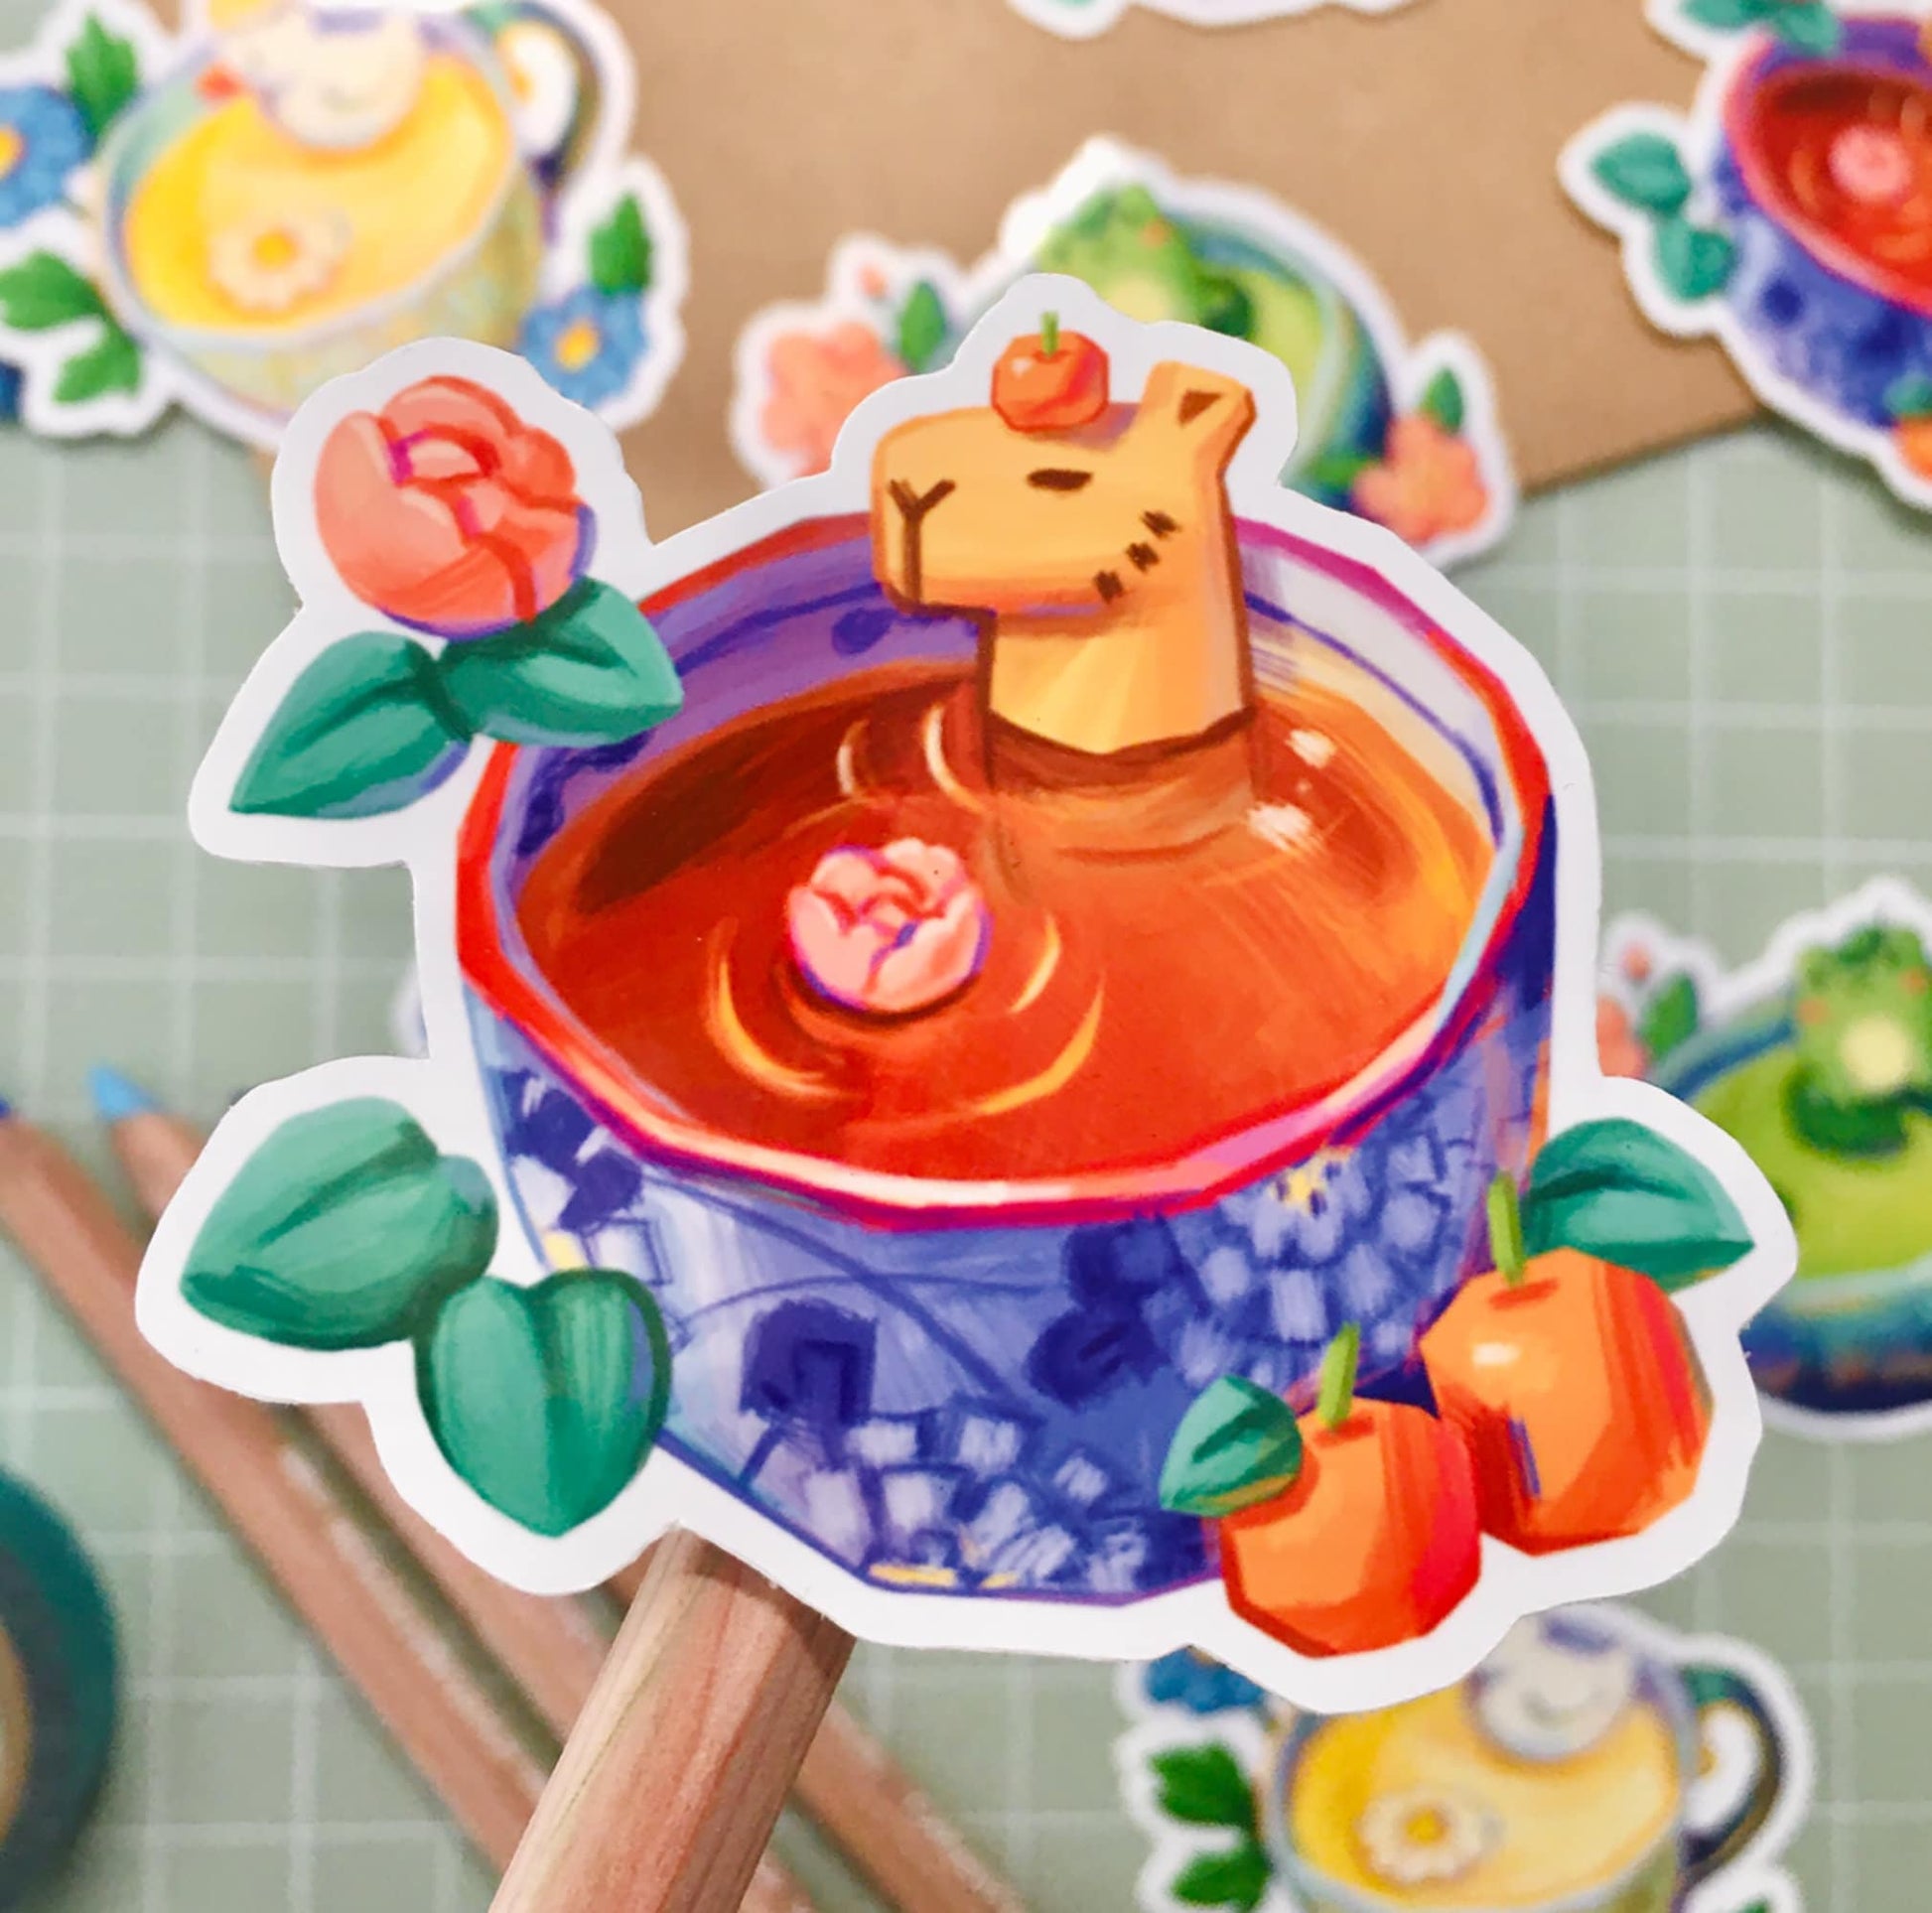 Capybara Orange Pekoe Tea | Waterproof Vinyl Sticker | Laptop Decal | kawaii stickers